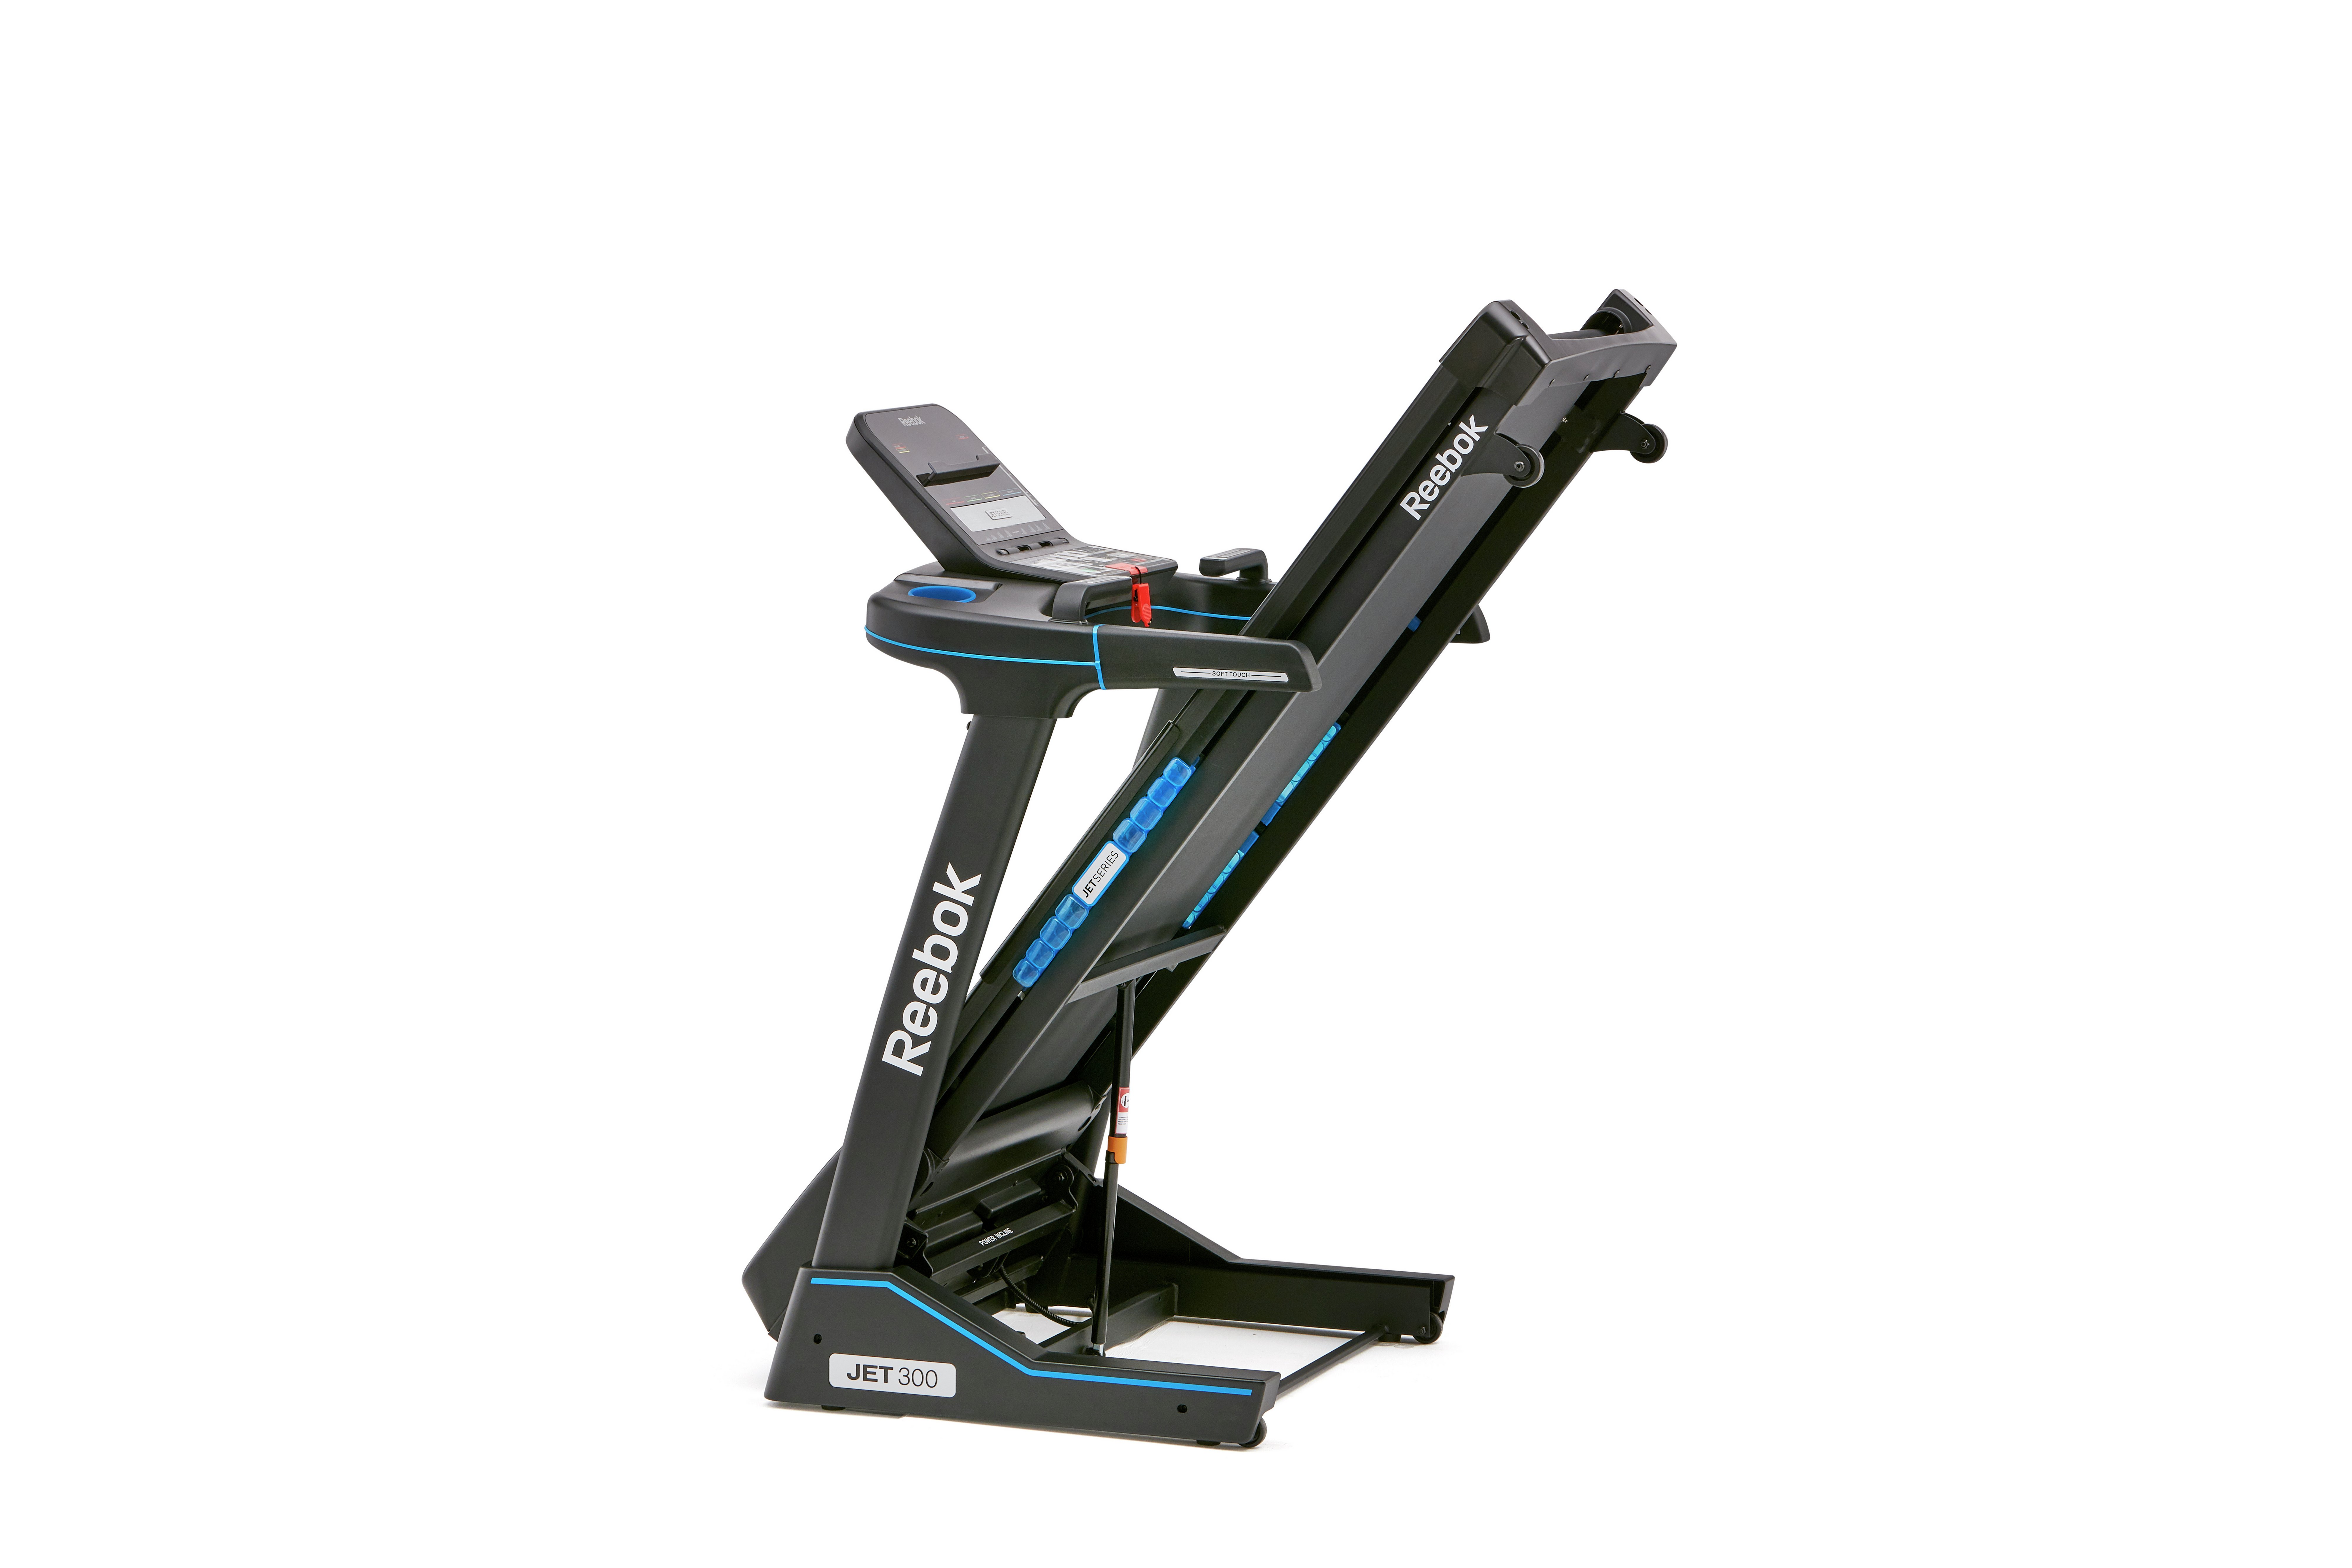 reebok jet 300 treadmill for sale